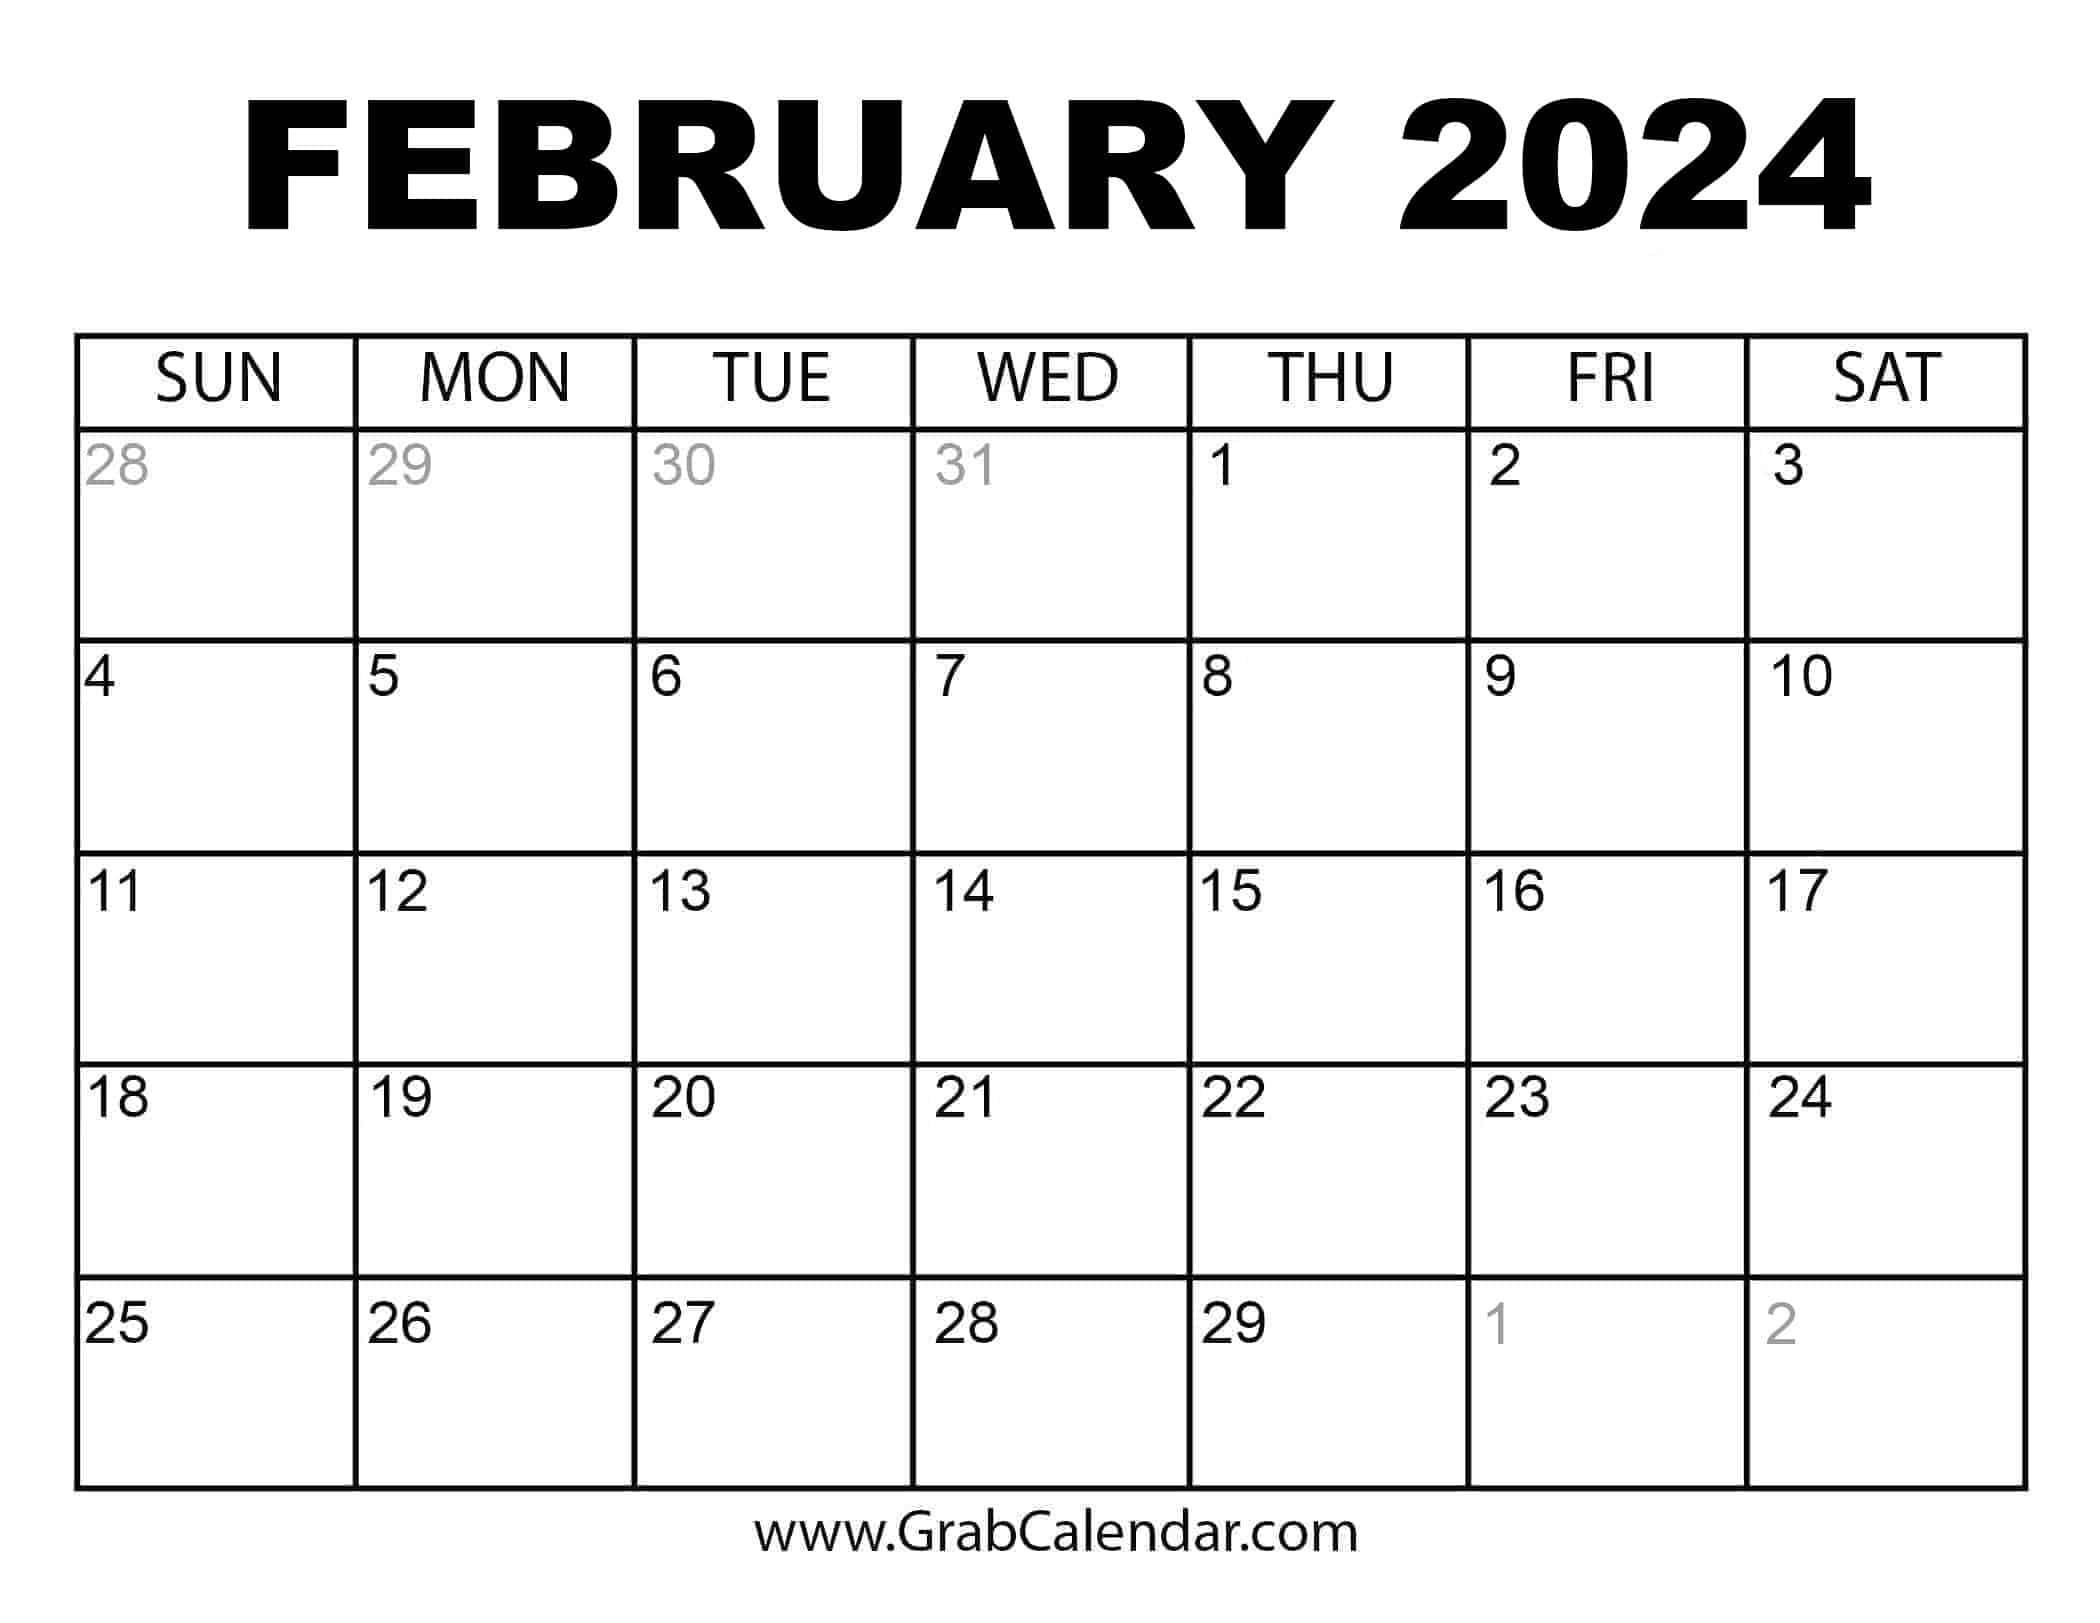 February 2024 Calendar To Print Lani Shanta - Free Printable 2024 February Calendar With Holidays